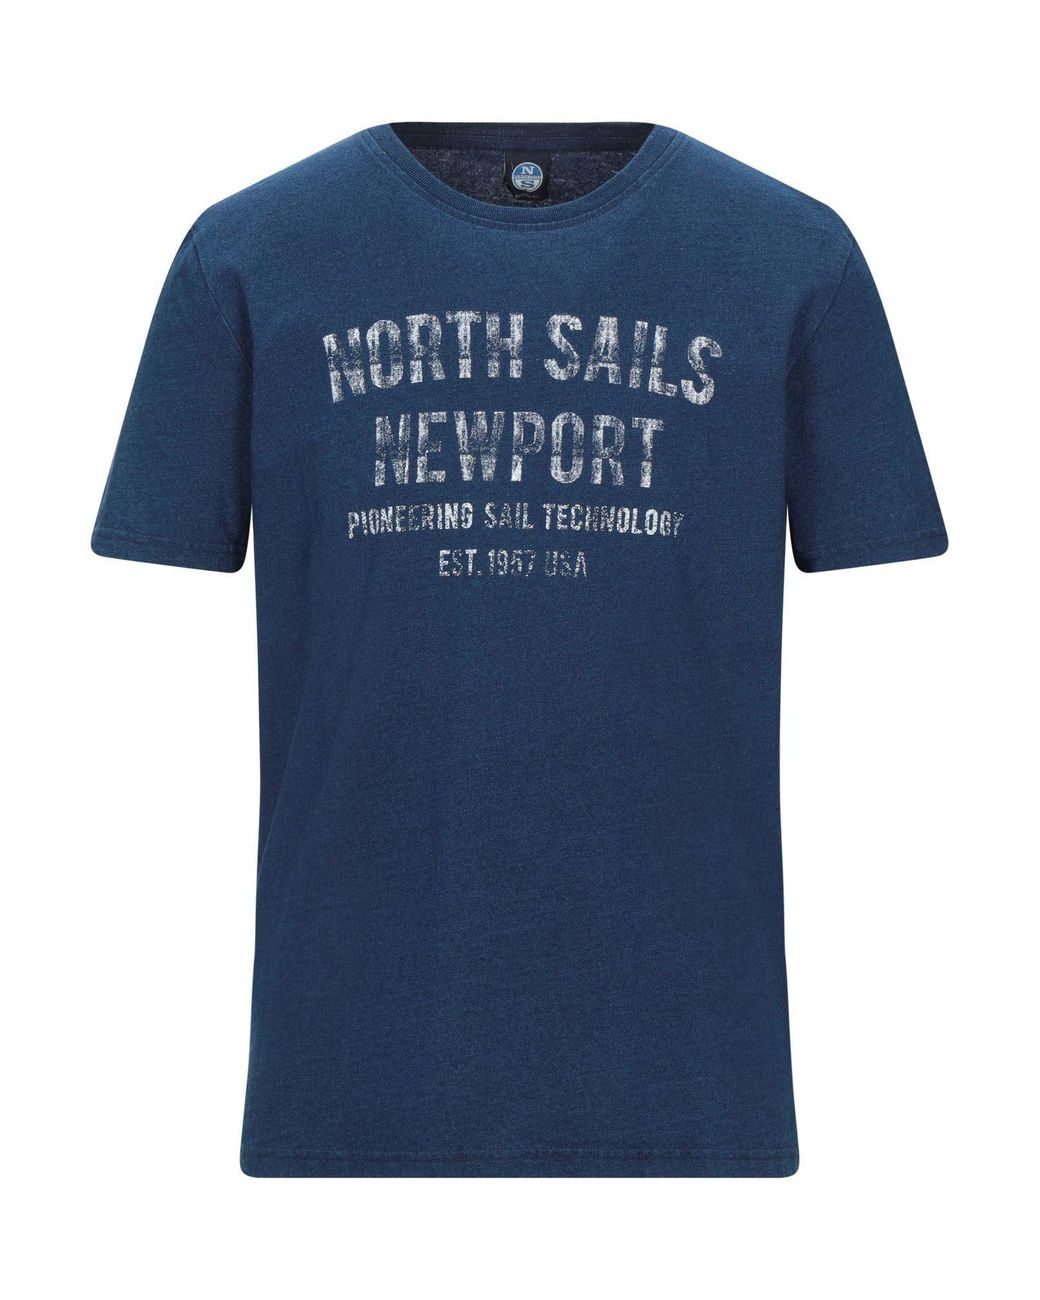 North Sails Cotton T-shirt in Dark Blue (Blue) for Men - Lyst